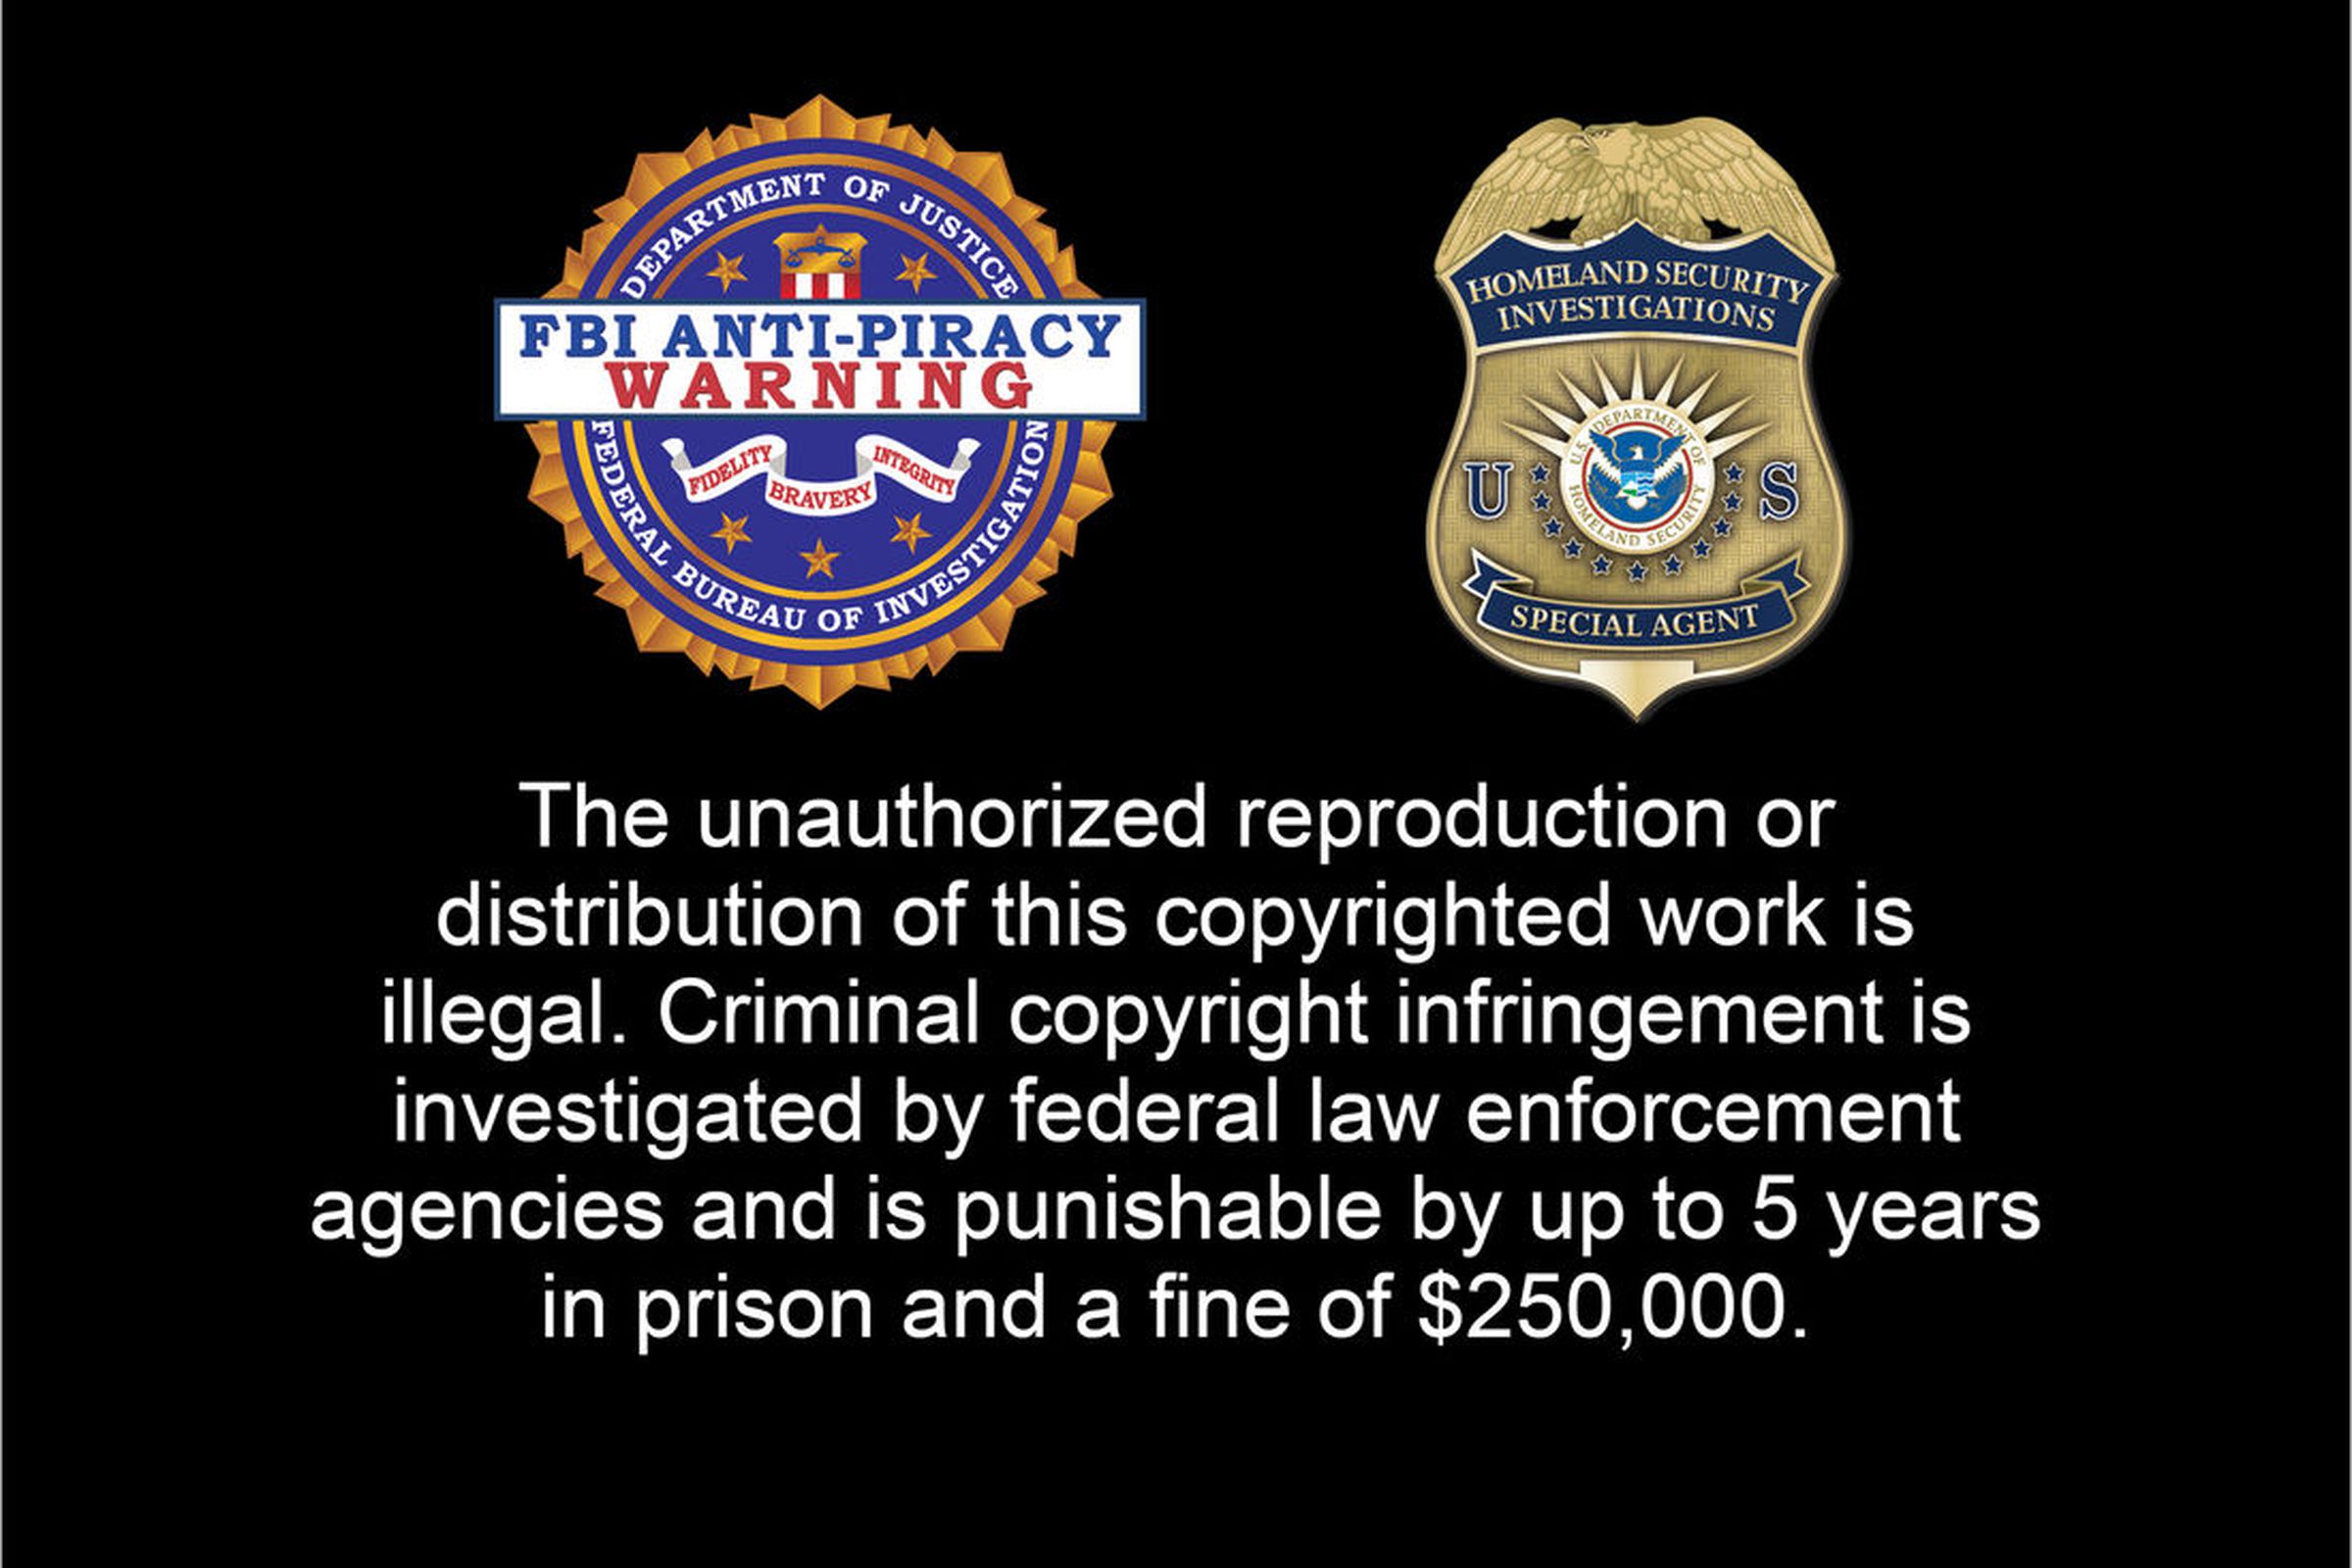 DVD piracy image 1